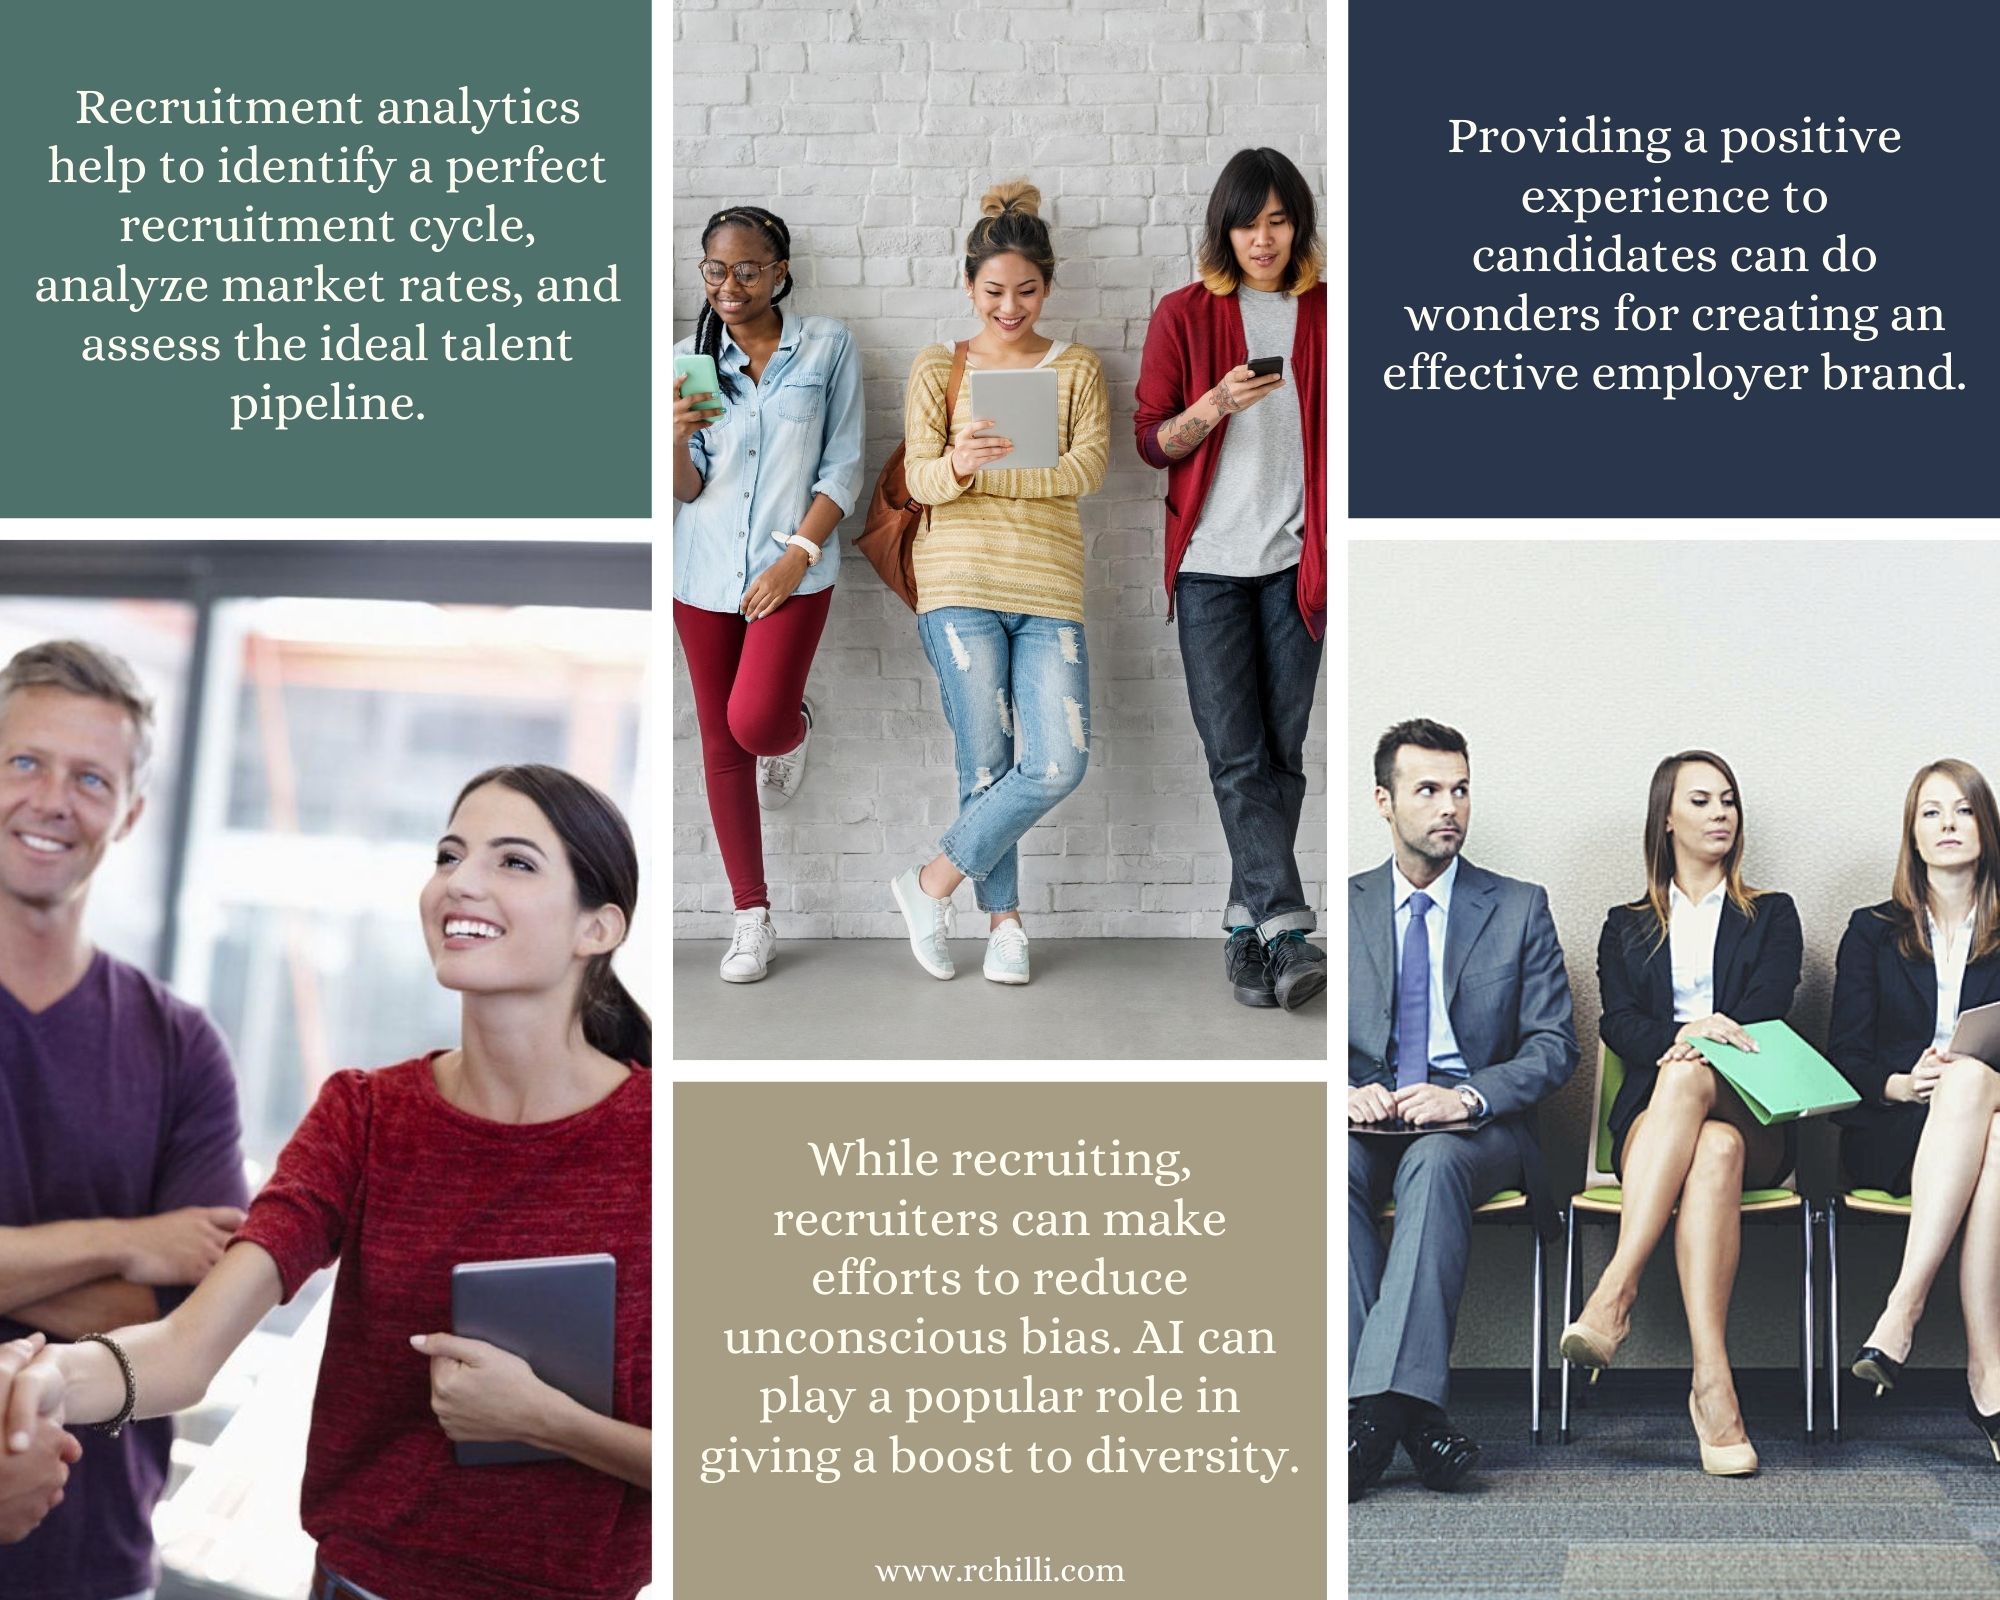 The Impact of Recruitment Analytics to Improve Hiring - HR Vendor News